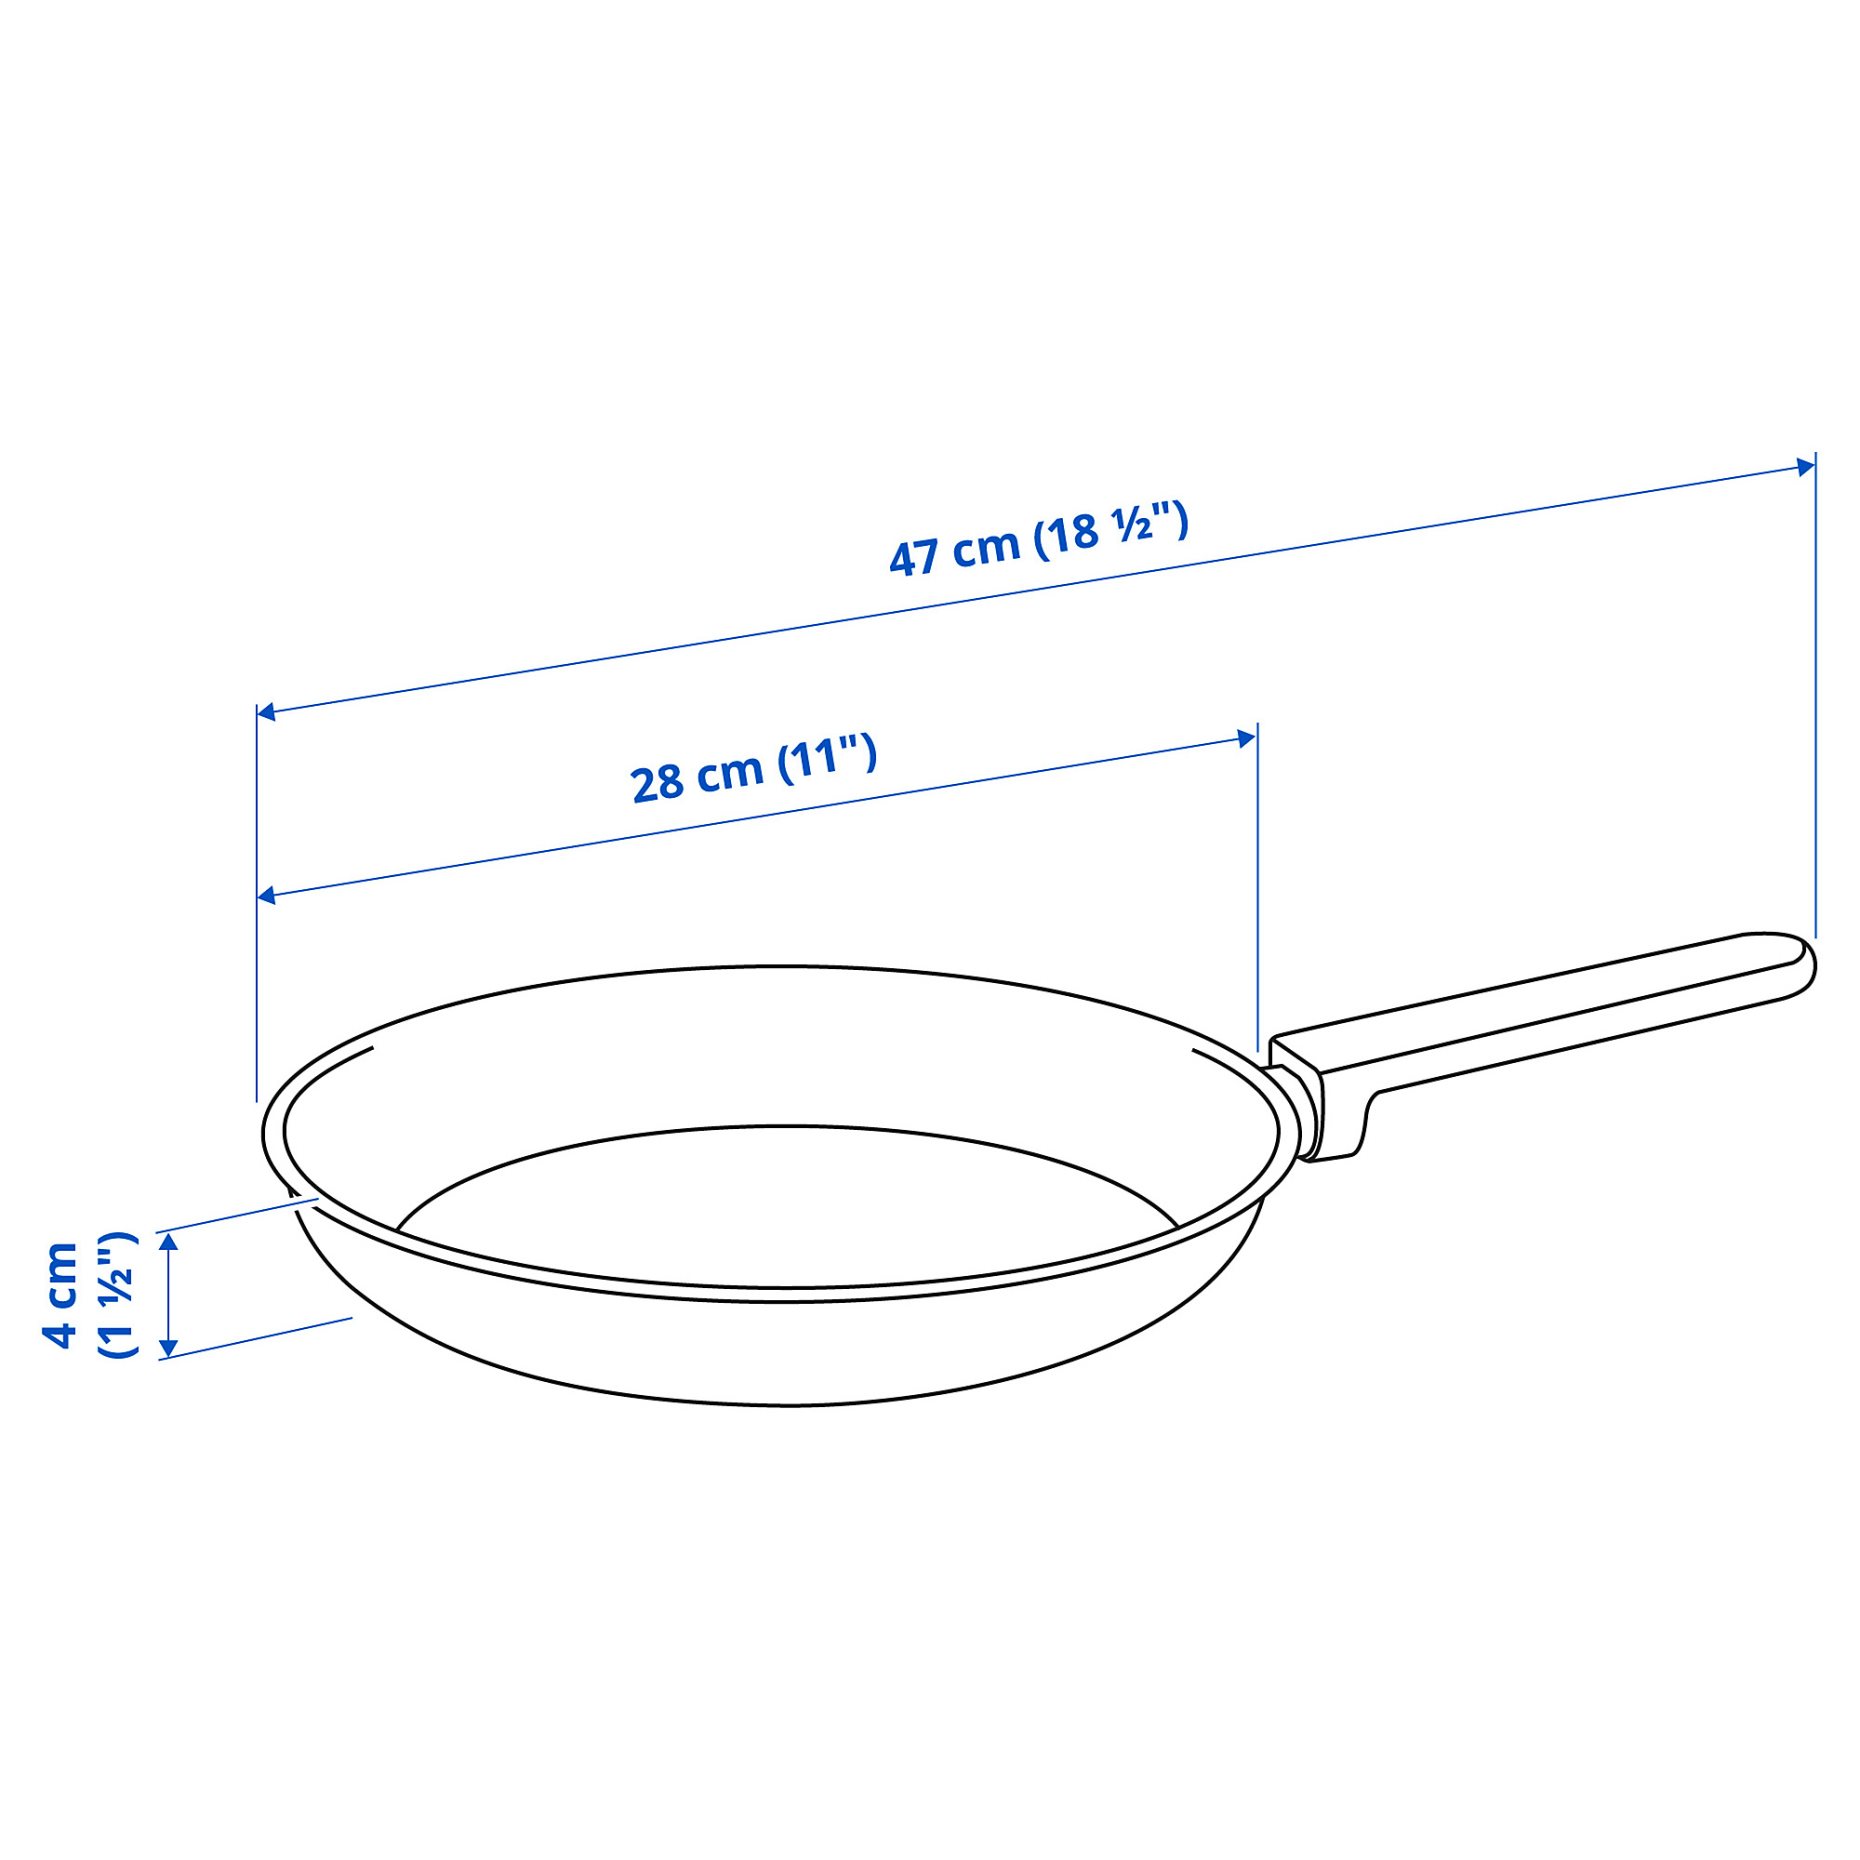 MIDDAGSMAT, frying pan/non-stick coating, 28 cm, 004.636.89